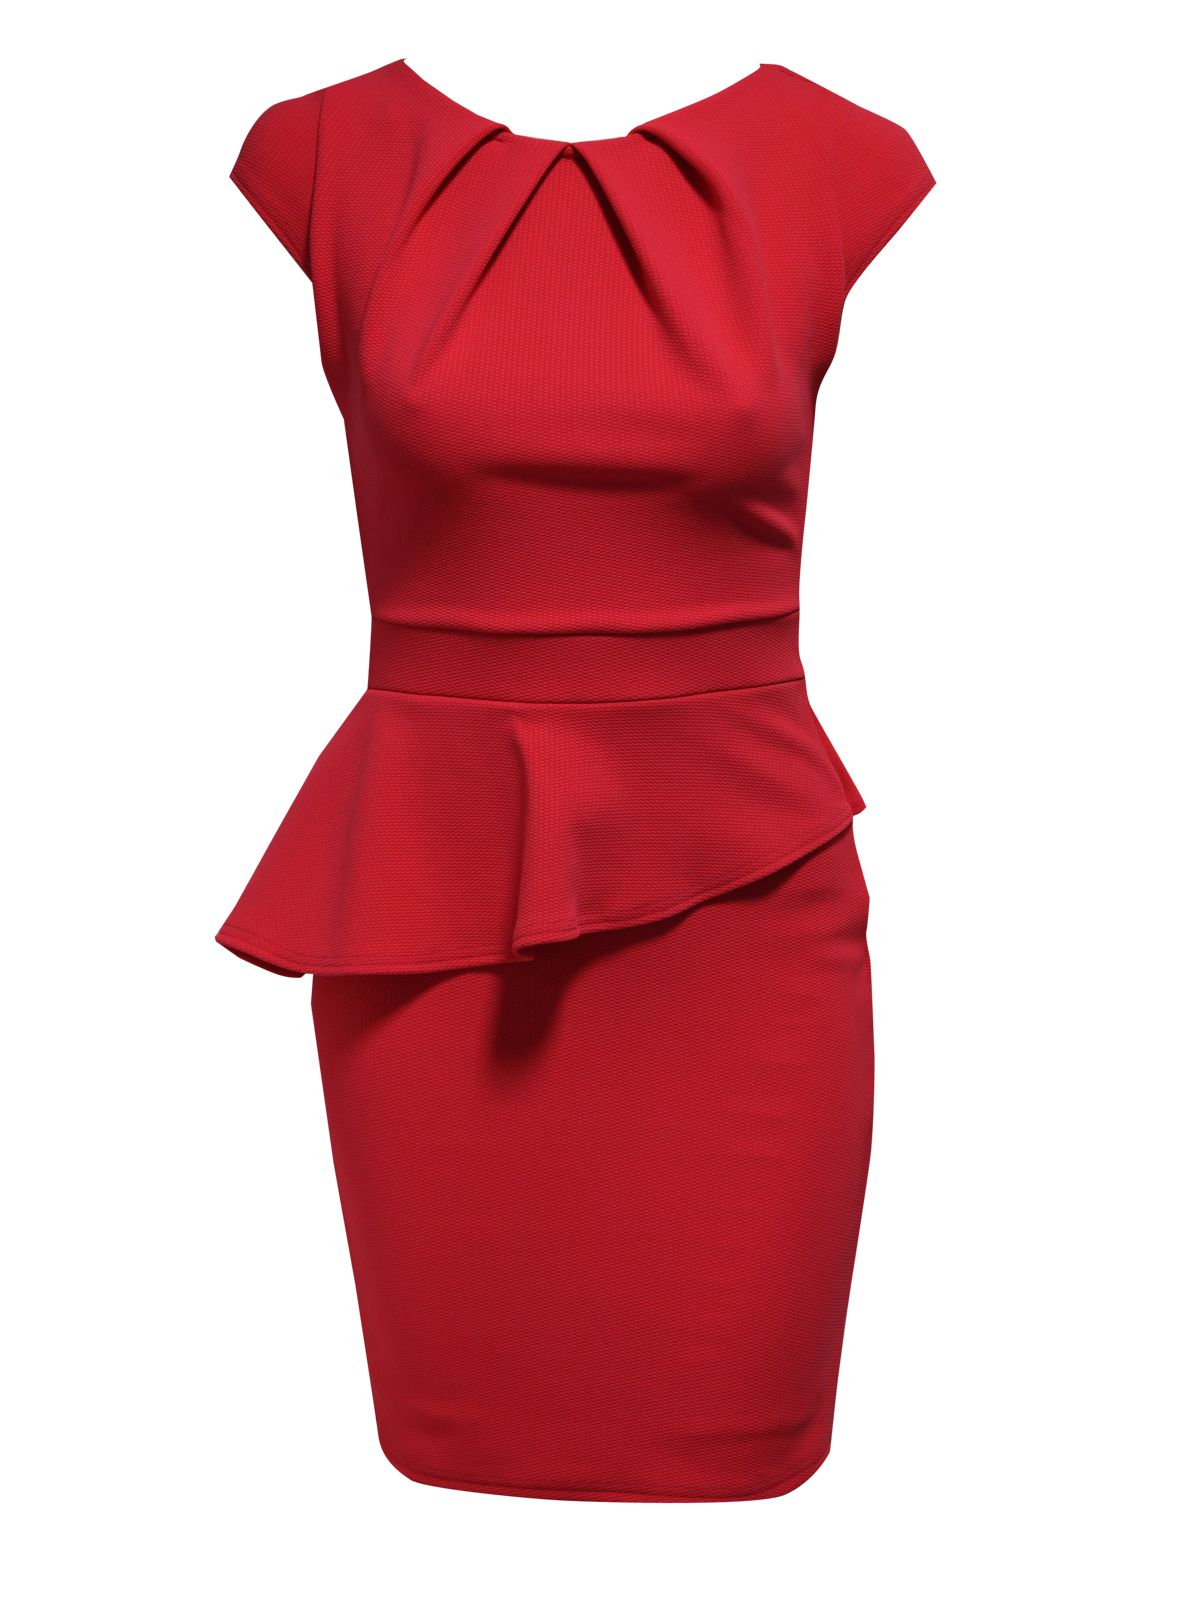 Jane norman Peplum Dress in Red | Lyst